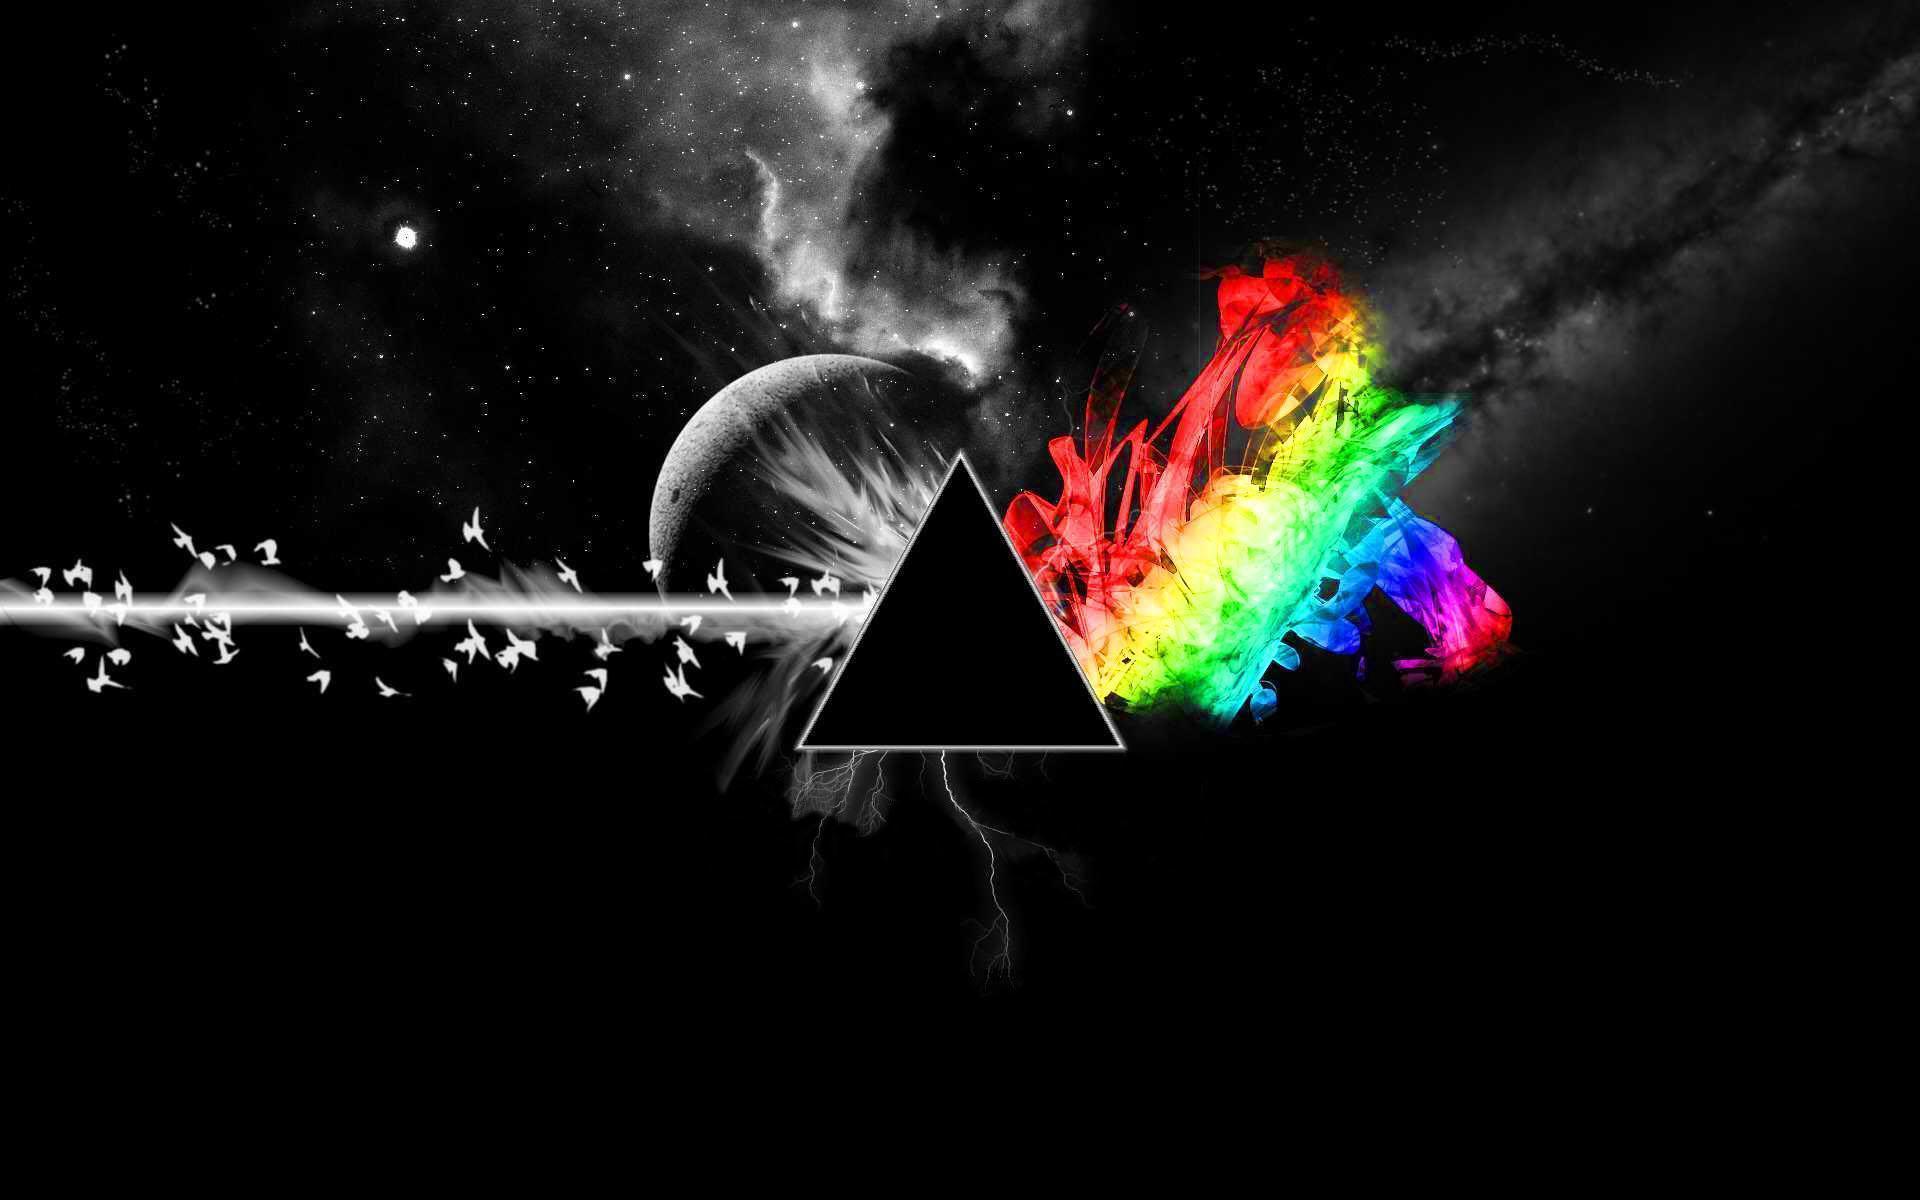 Pink Floyd Wallpaper. Pink Floyd Background